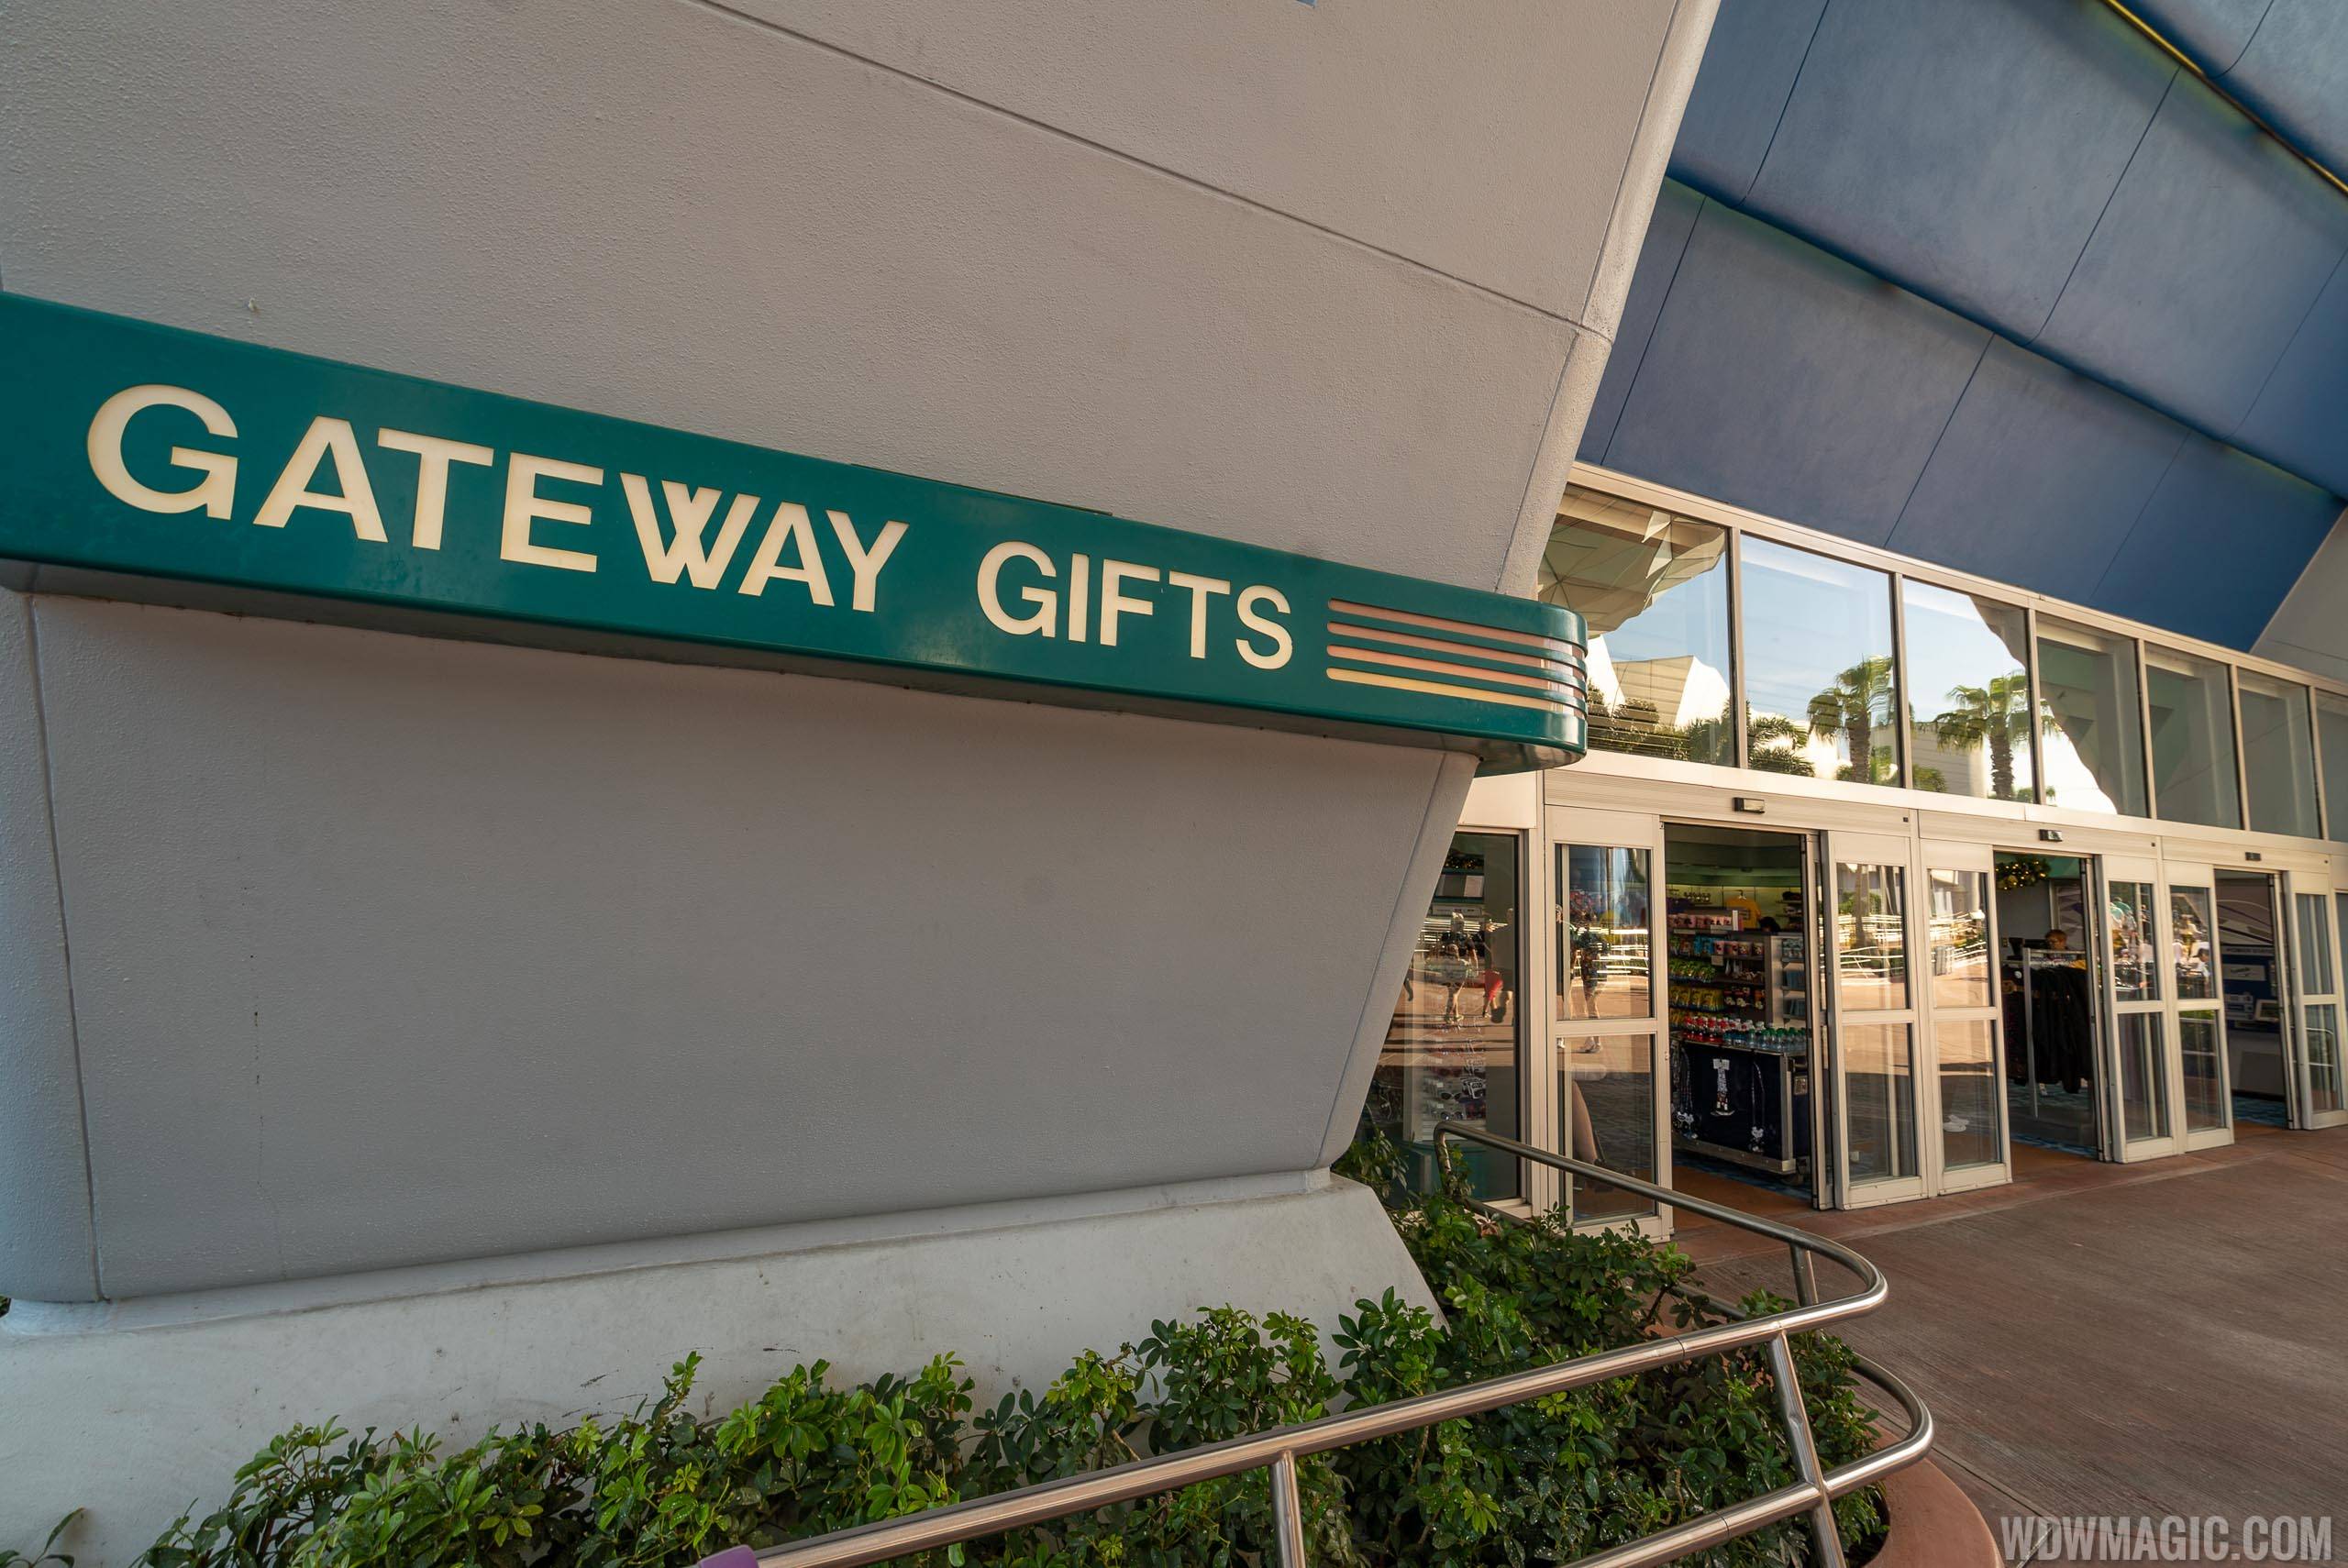 Epcot's Gateway Gifts closing for short refurbishment next week